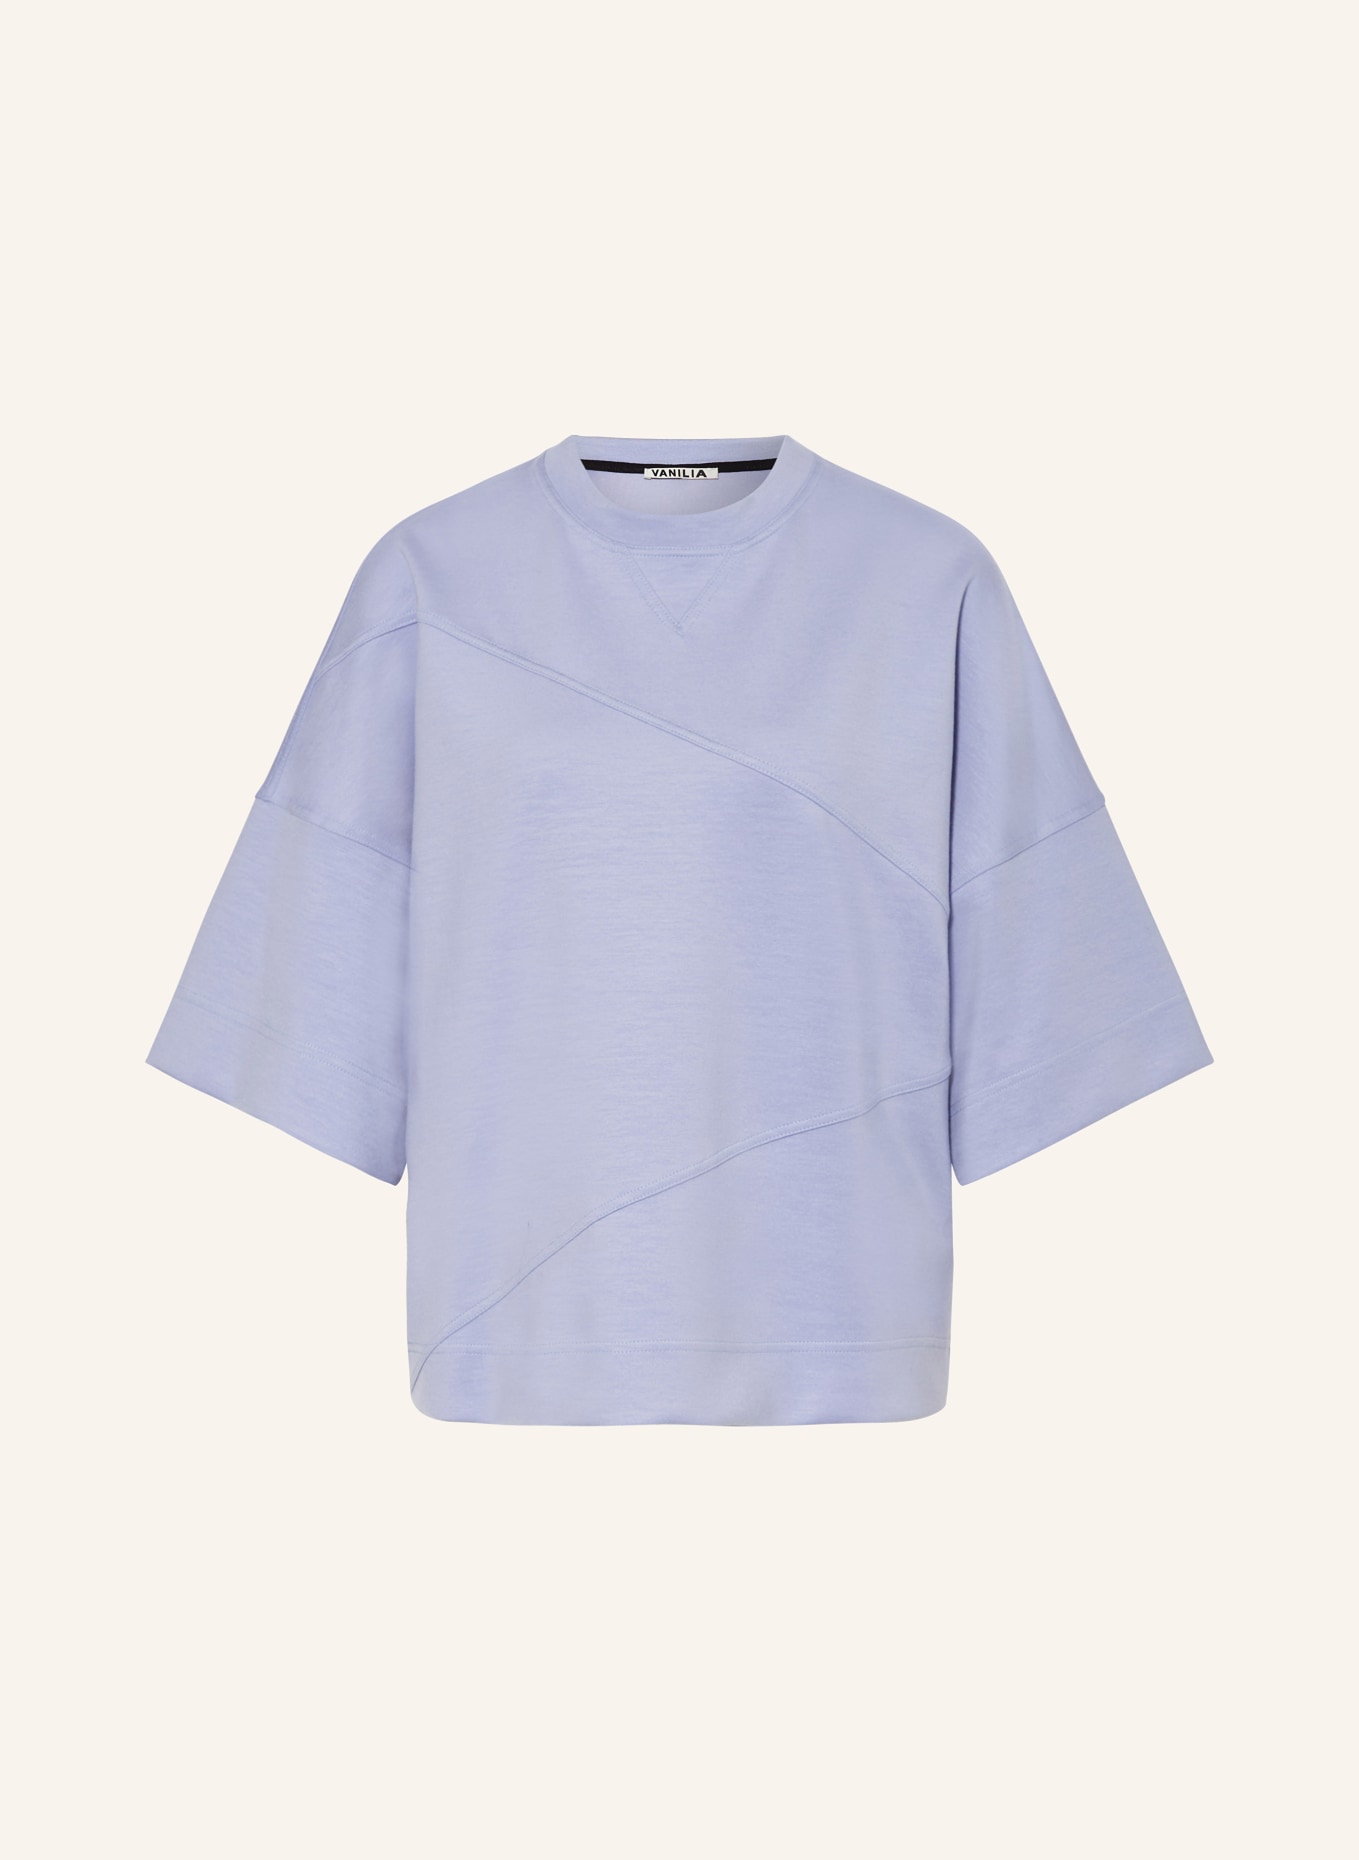 VANILIA T-shirt, Color: BLUE GRAY (Image 1)